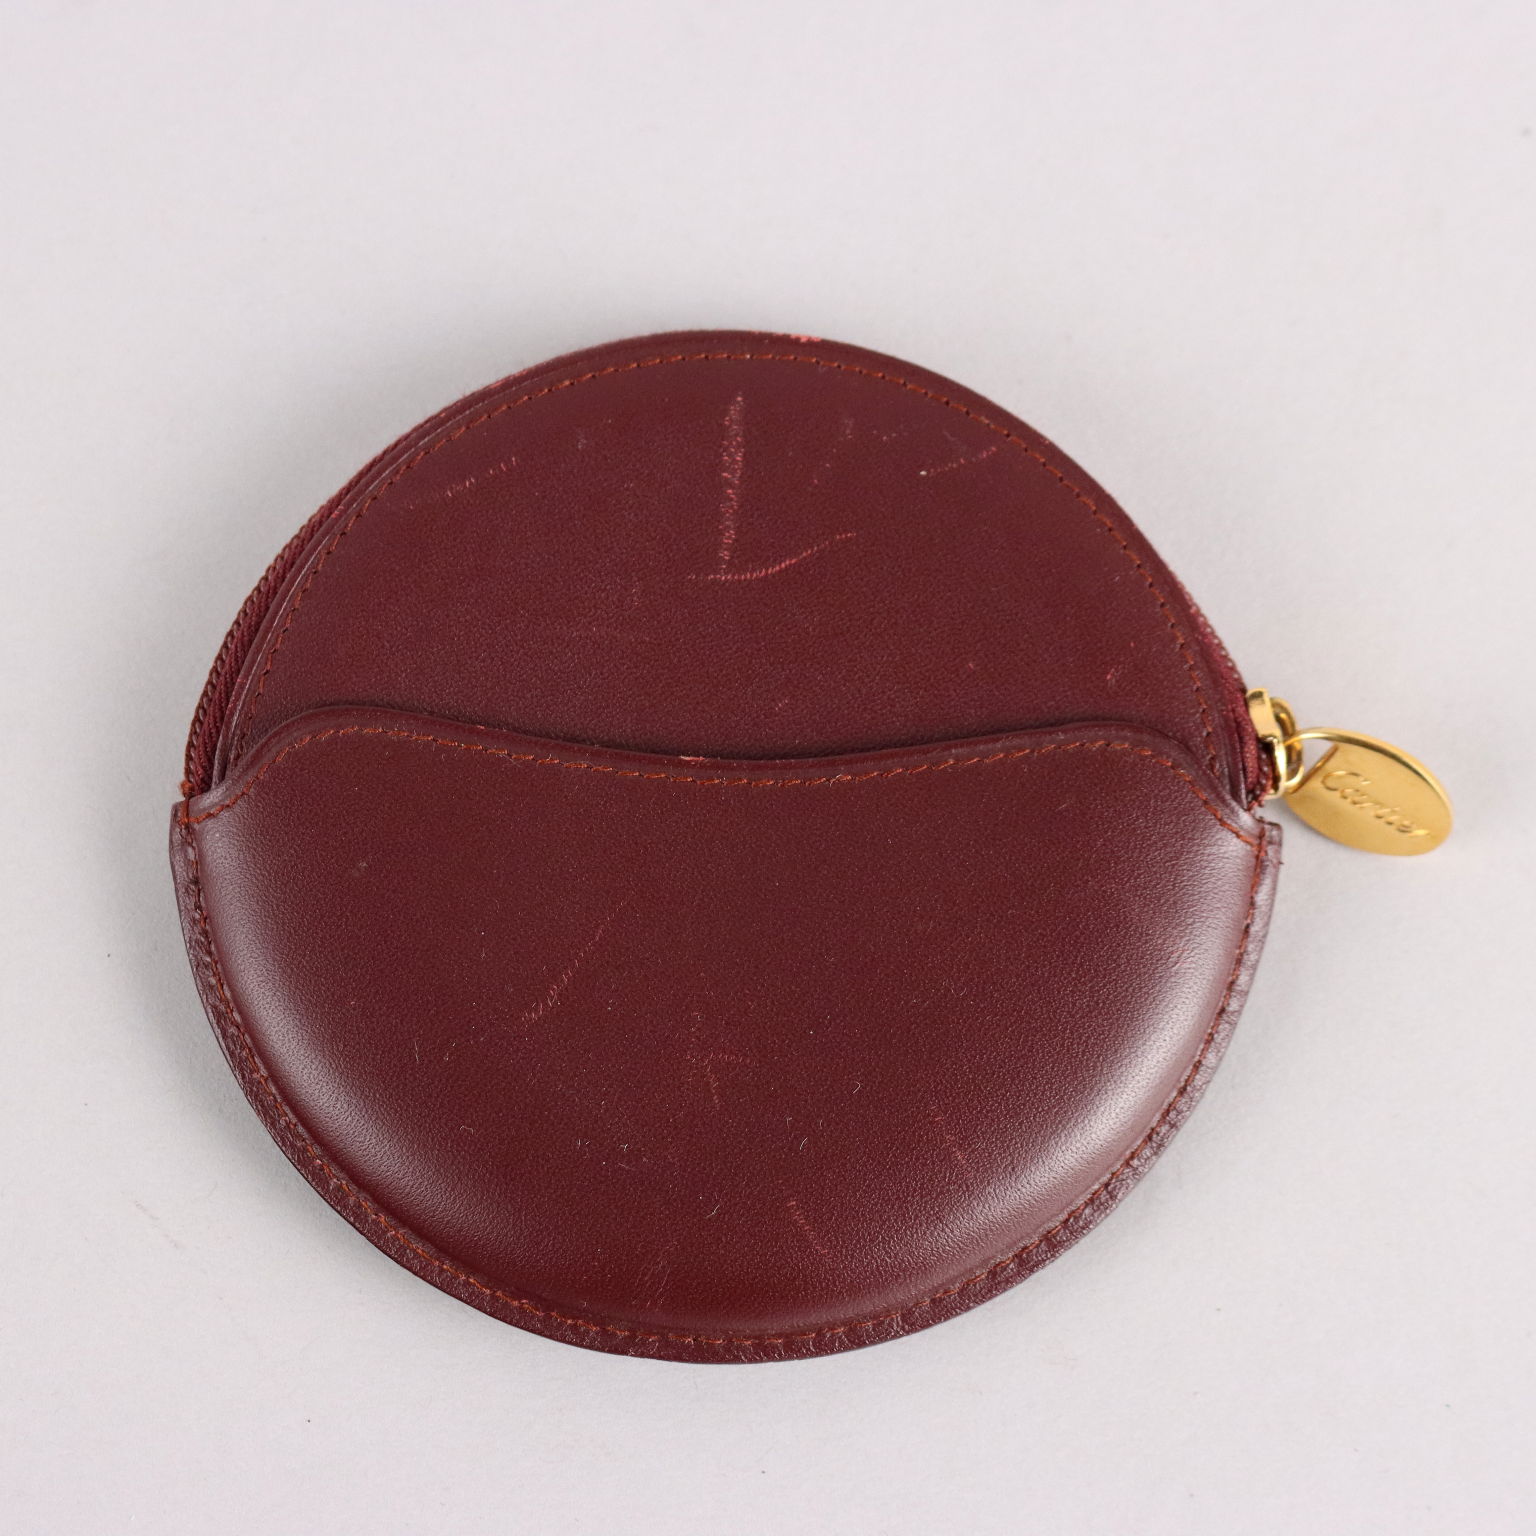 Lot - Cartier Coin Purse; Deep red leather Cartier coin purse with original  Cartier box.